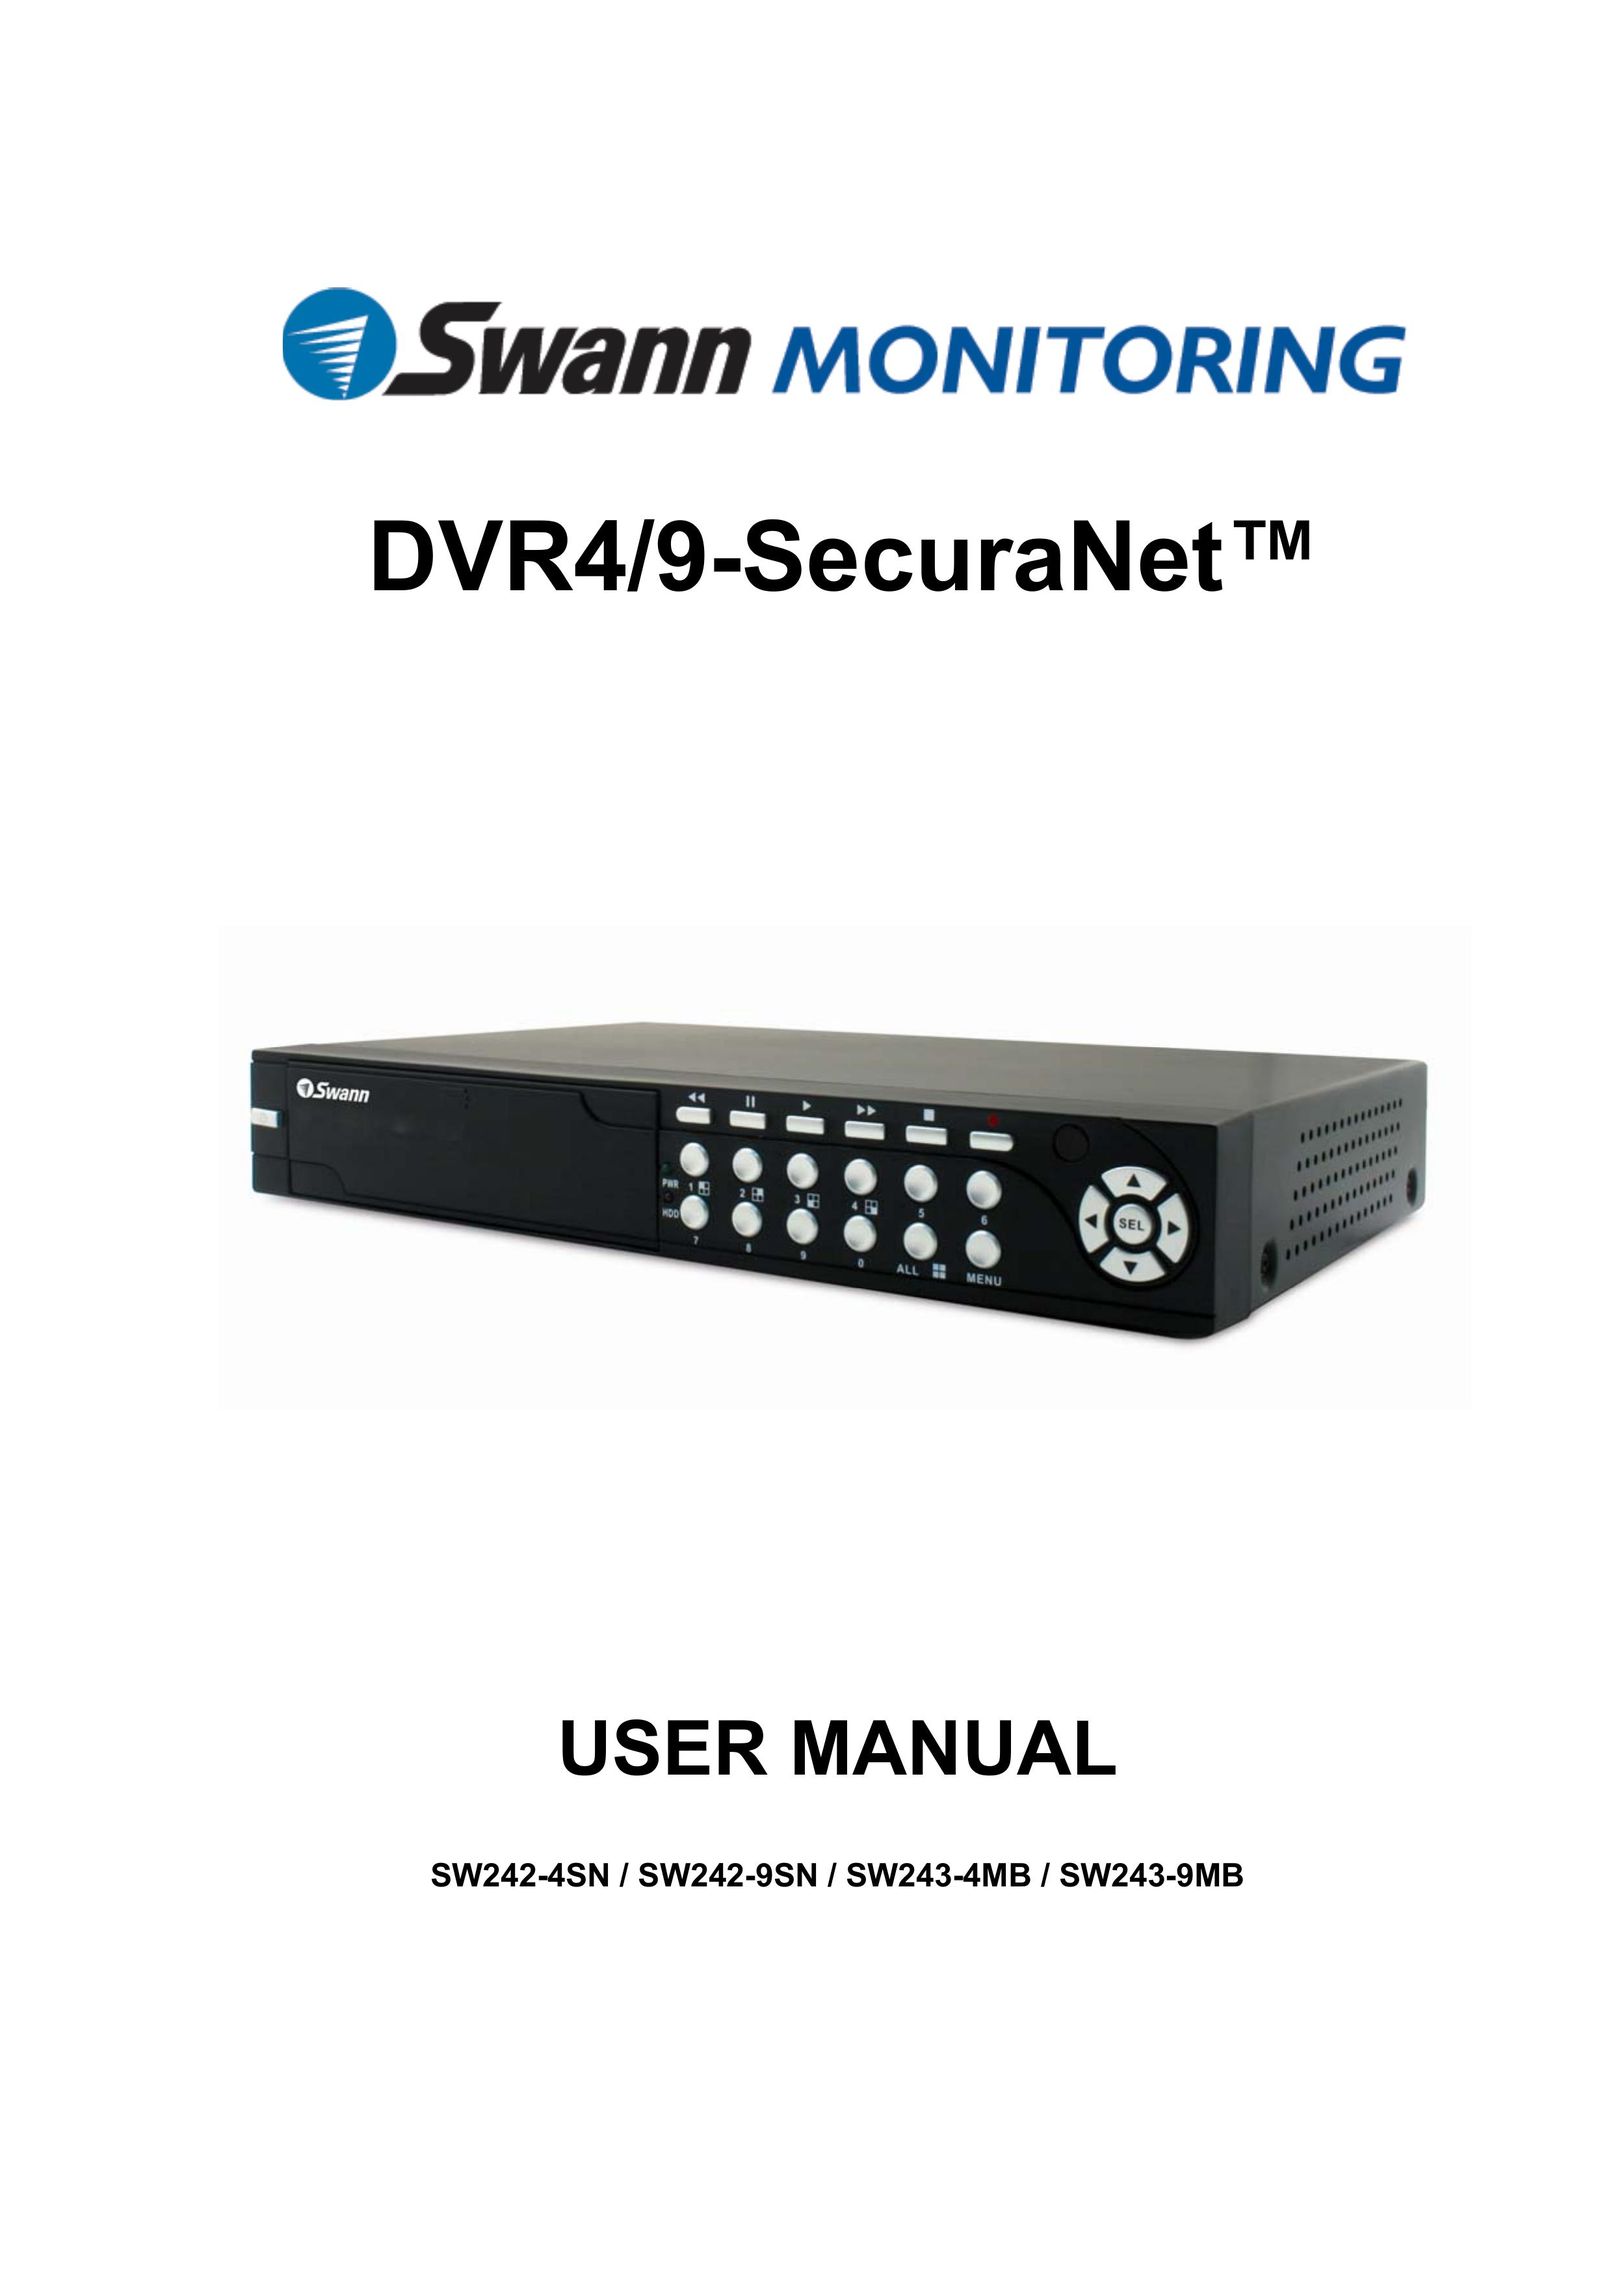 Swann SW242-9SN DVR User Manual